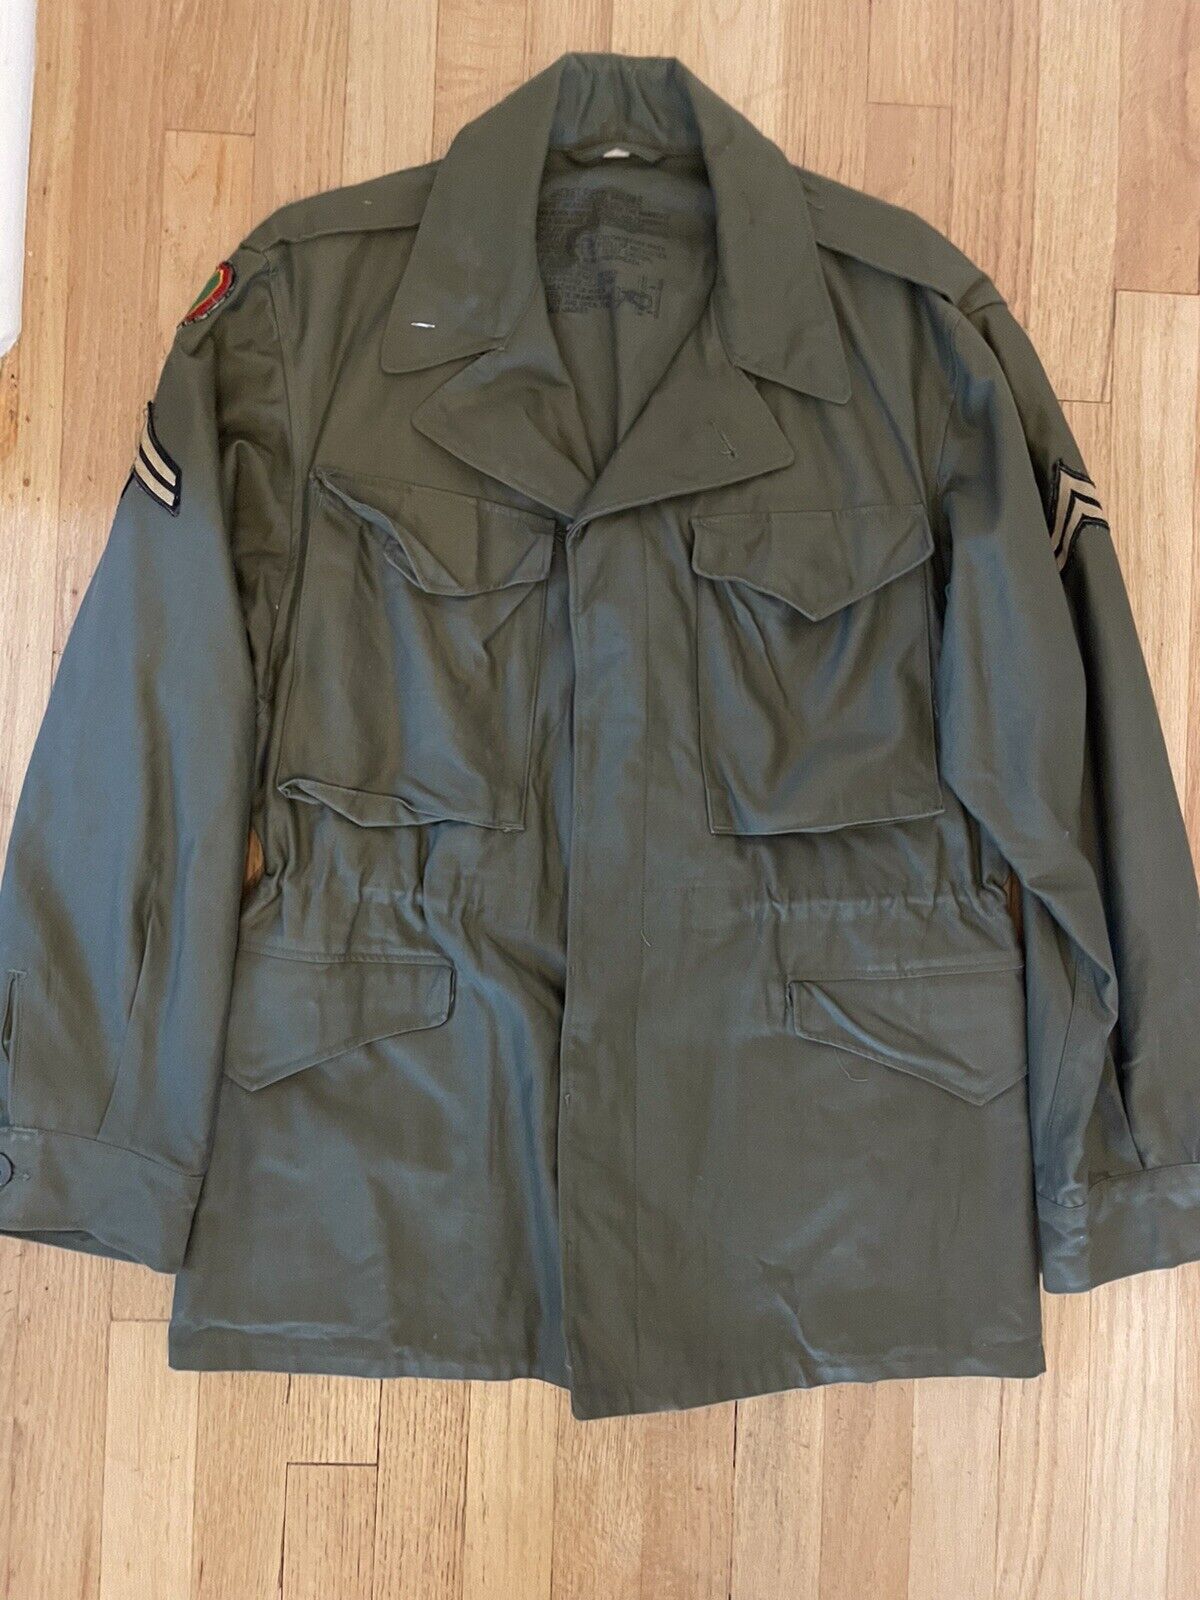 ORIGINAL WWII WW2 US M43 Field Jacket Great Condition Size 40 R